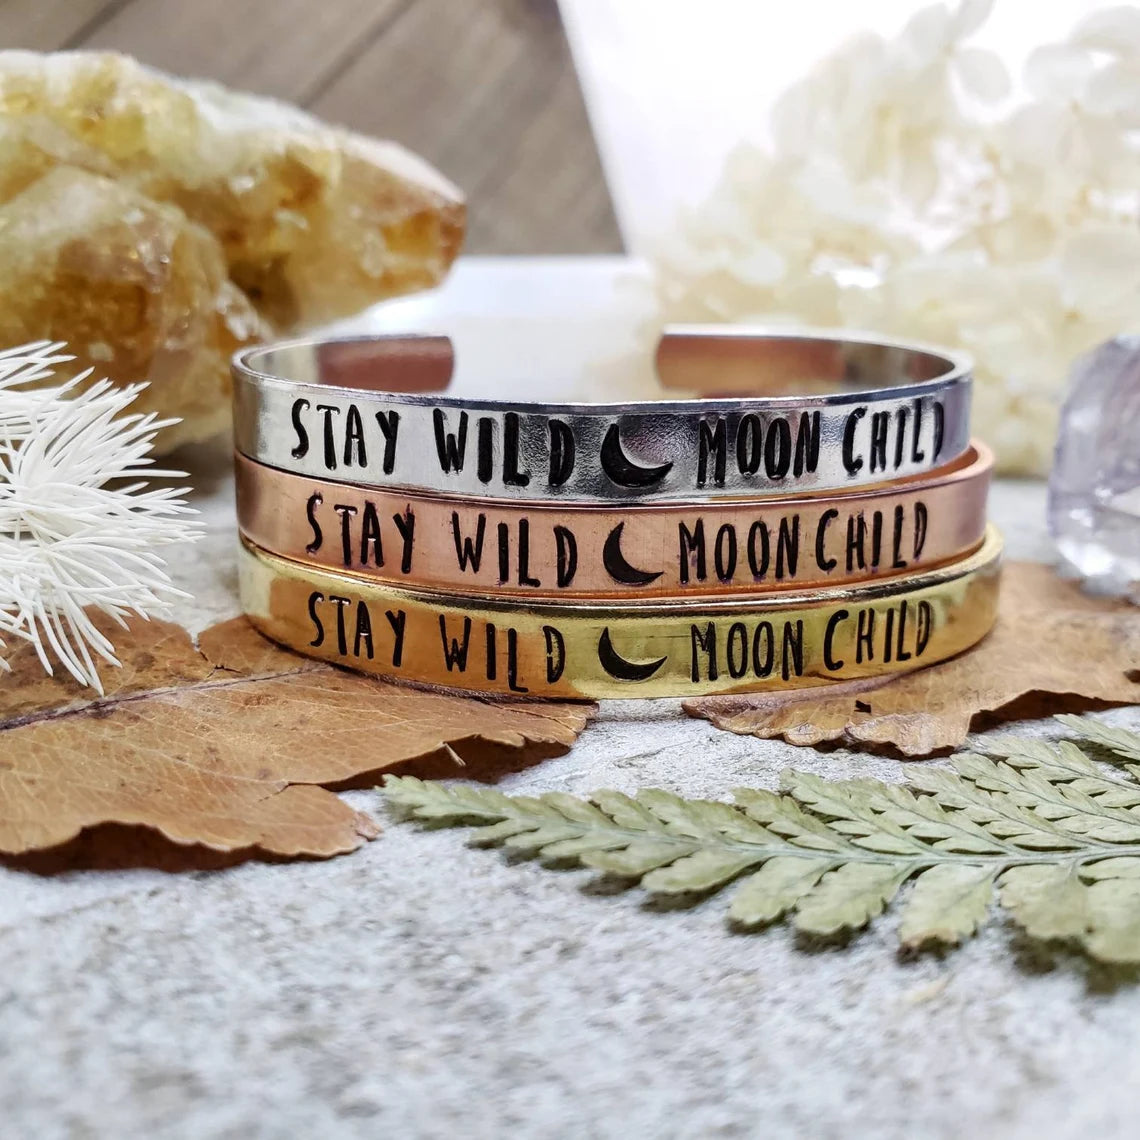 Stay wild moon child cuff bracelet